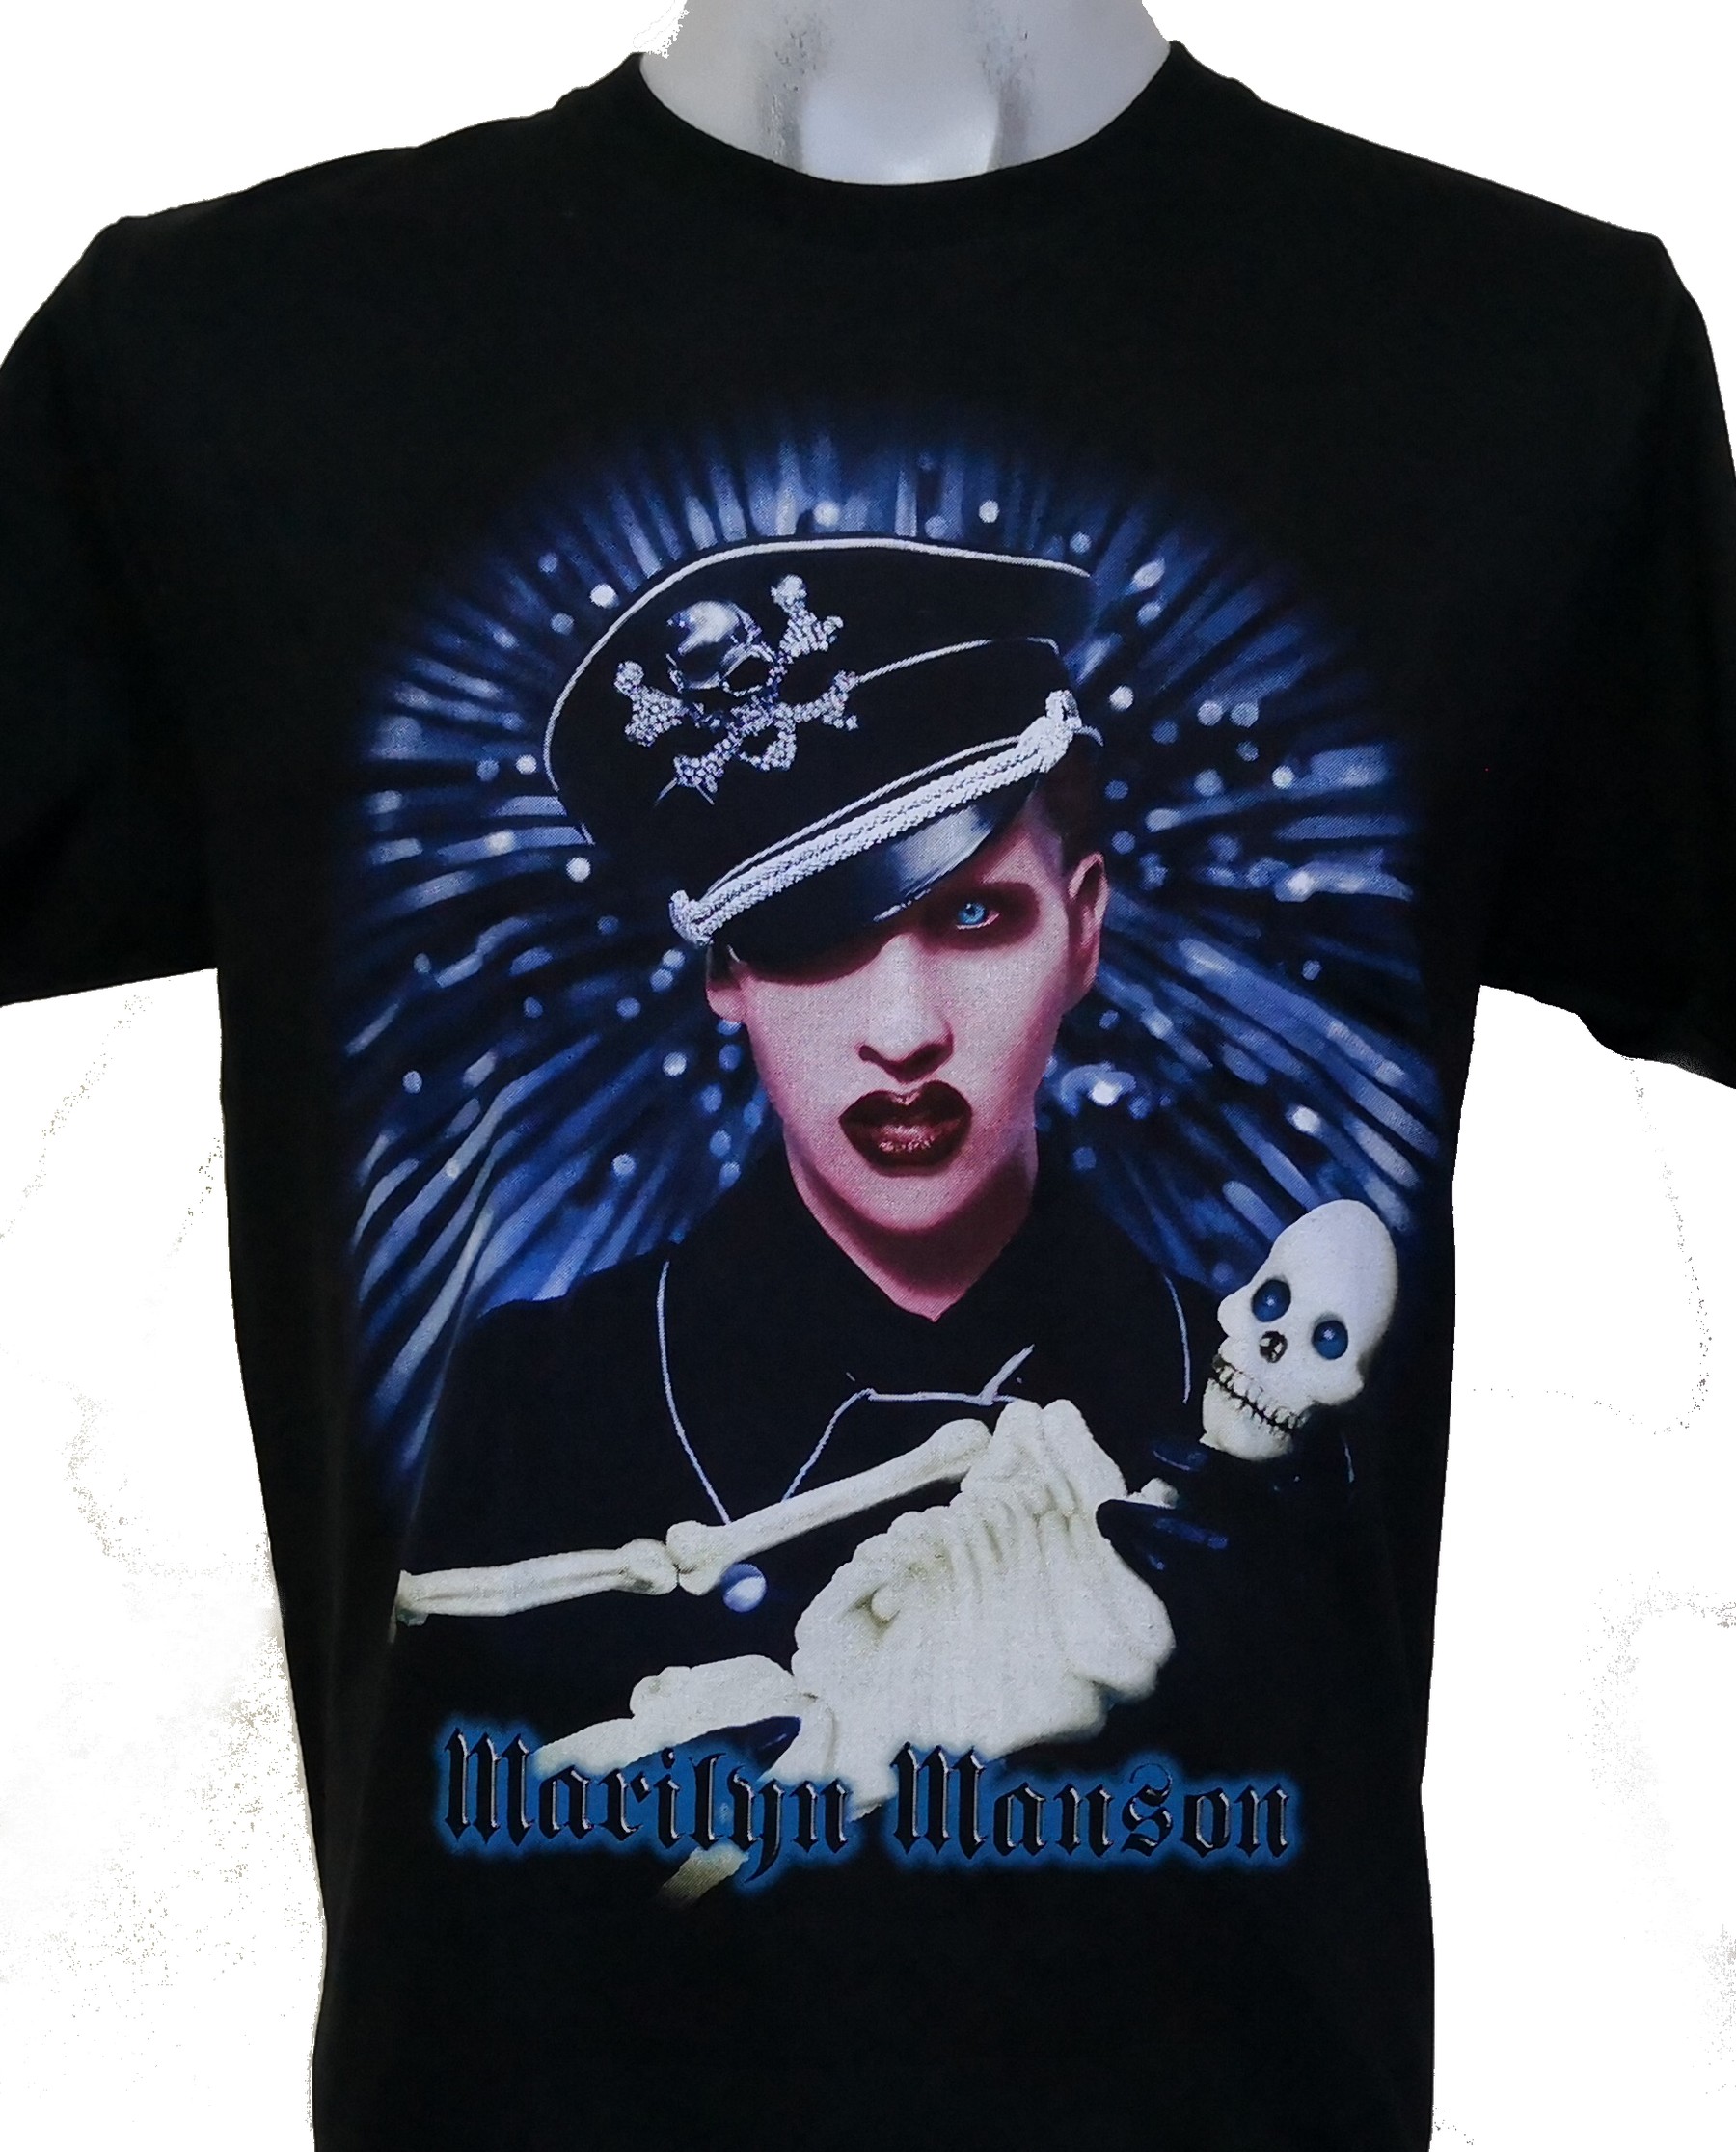 Marilyn Manson t-shirt size M – RoxxBKK